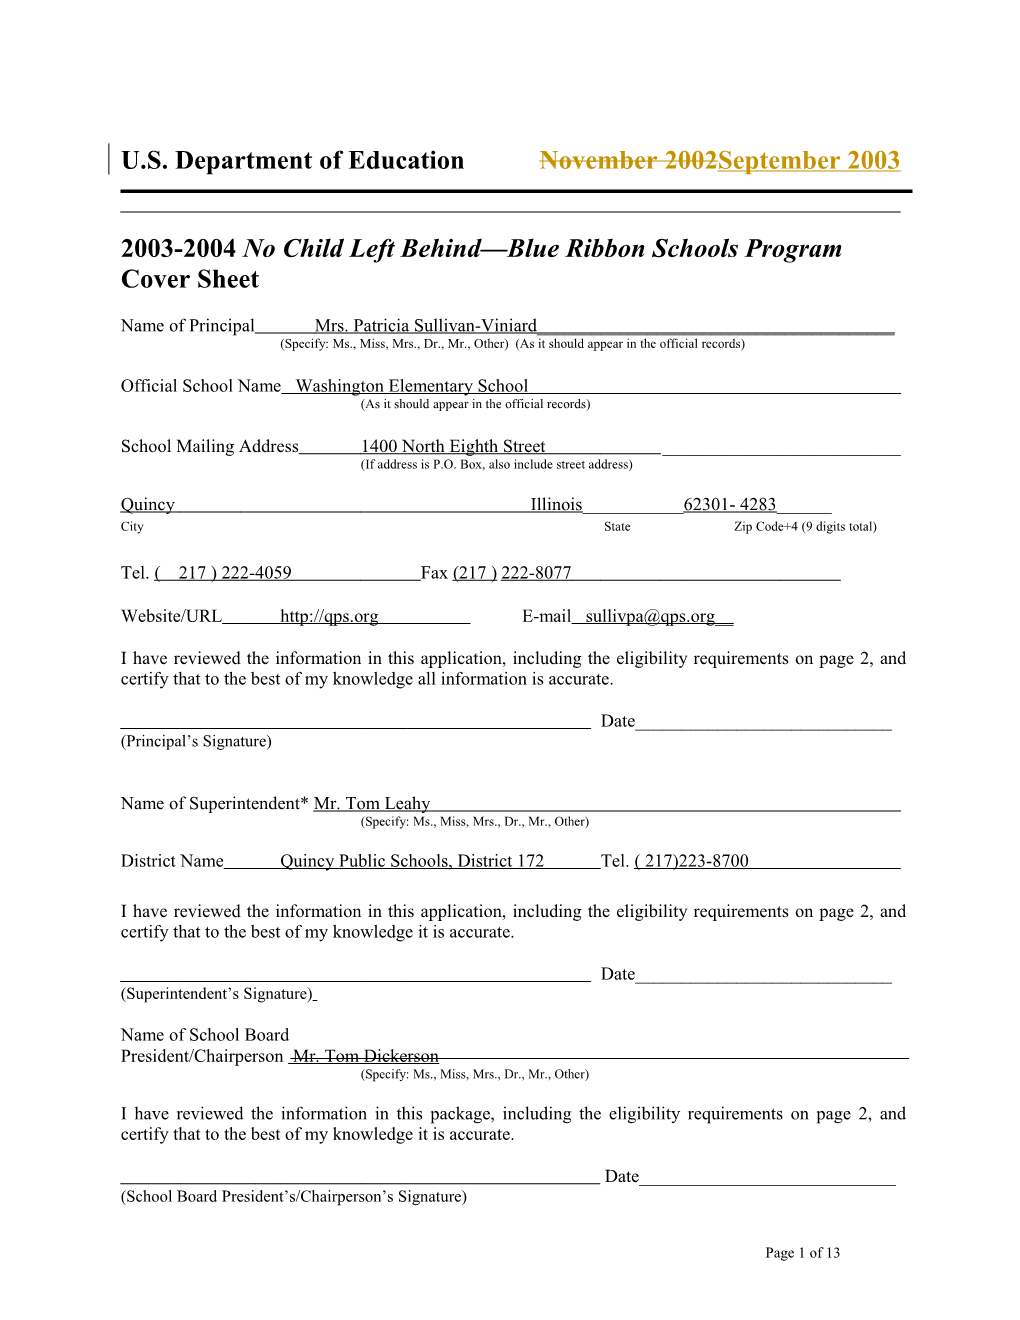 Washington Elementary School 2004 No Child Left Behind-Blue Ribbon School Application (Msword)